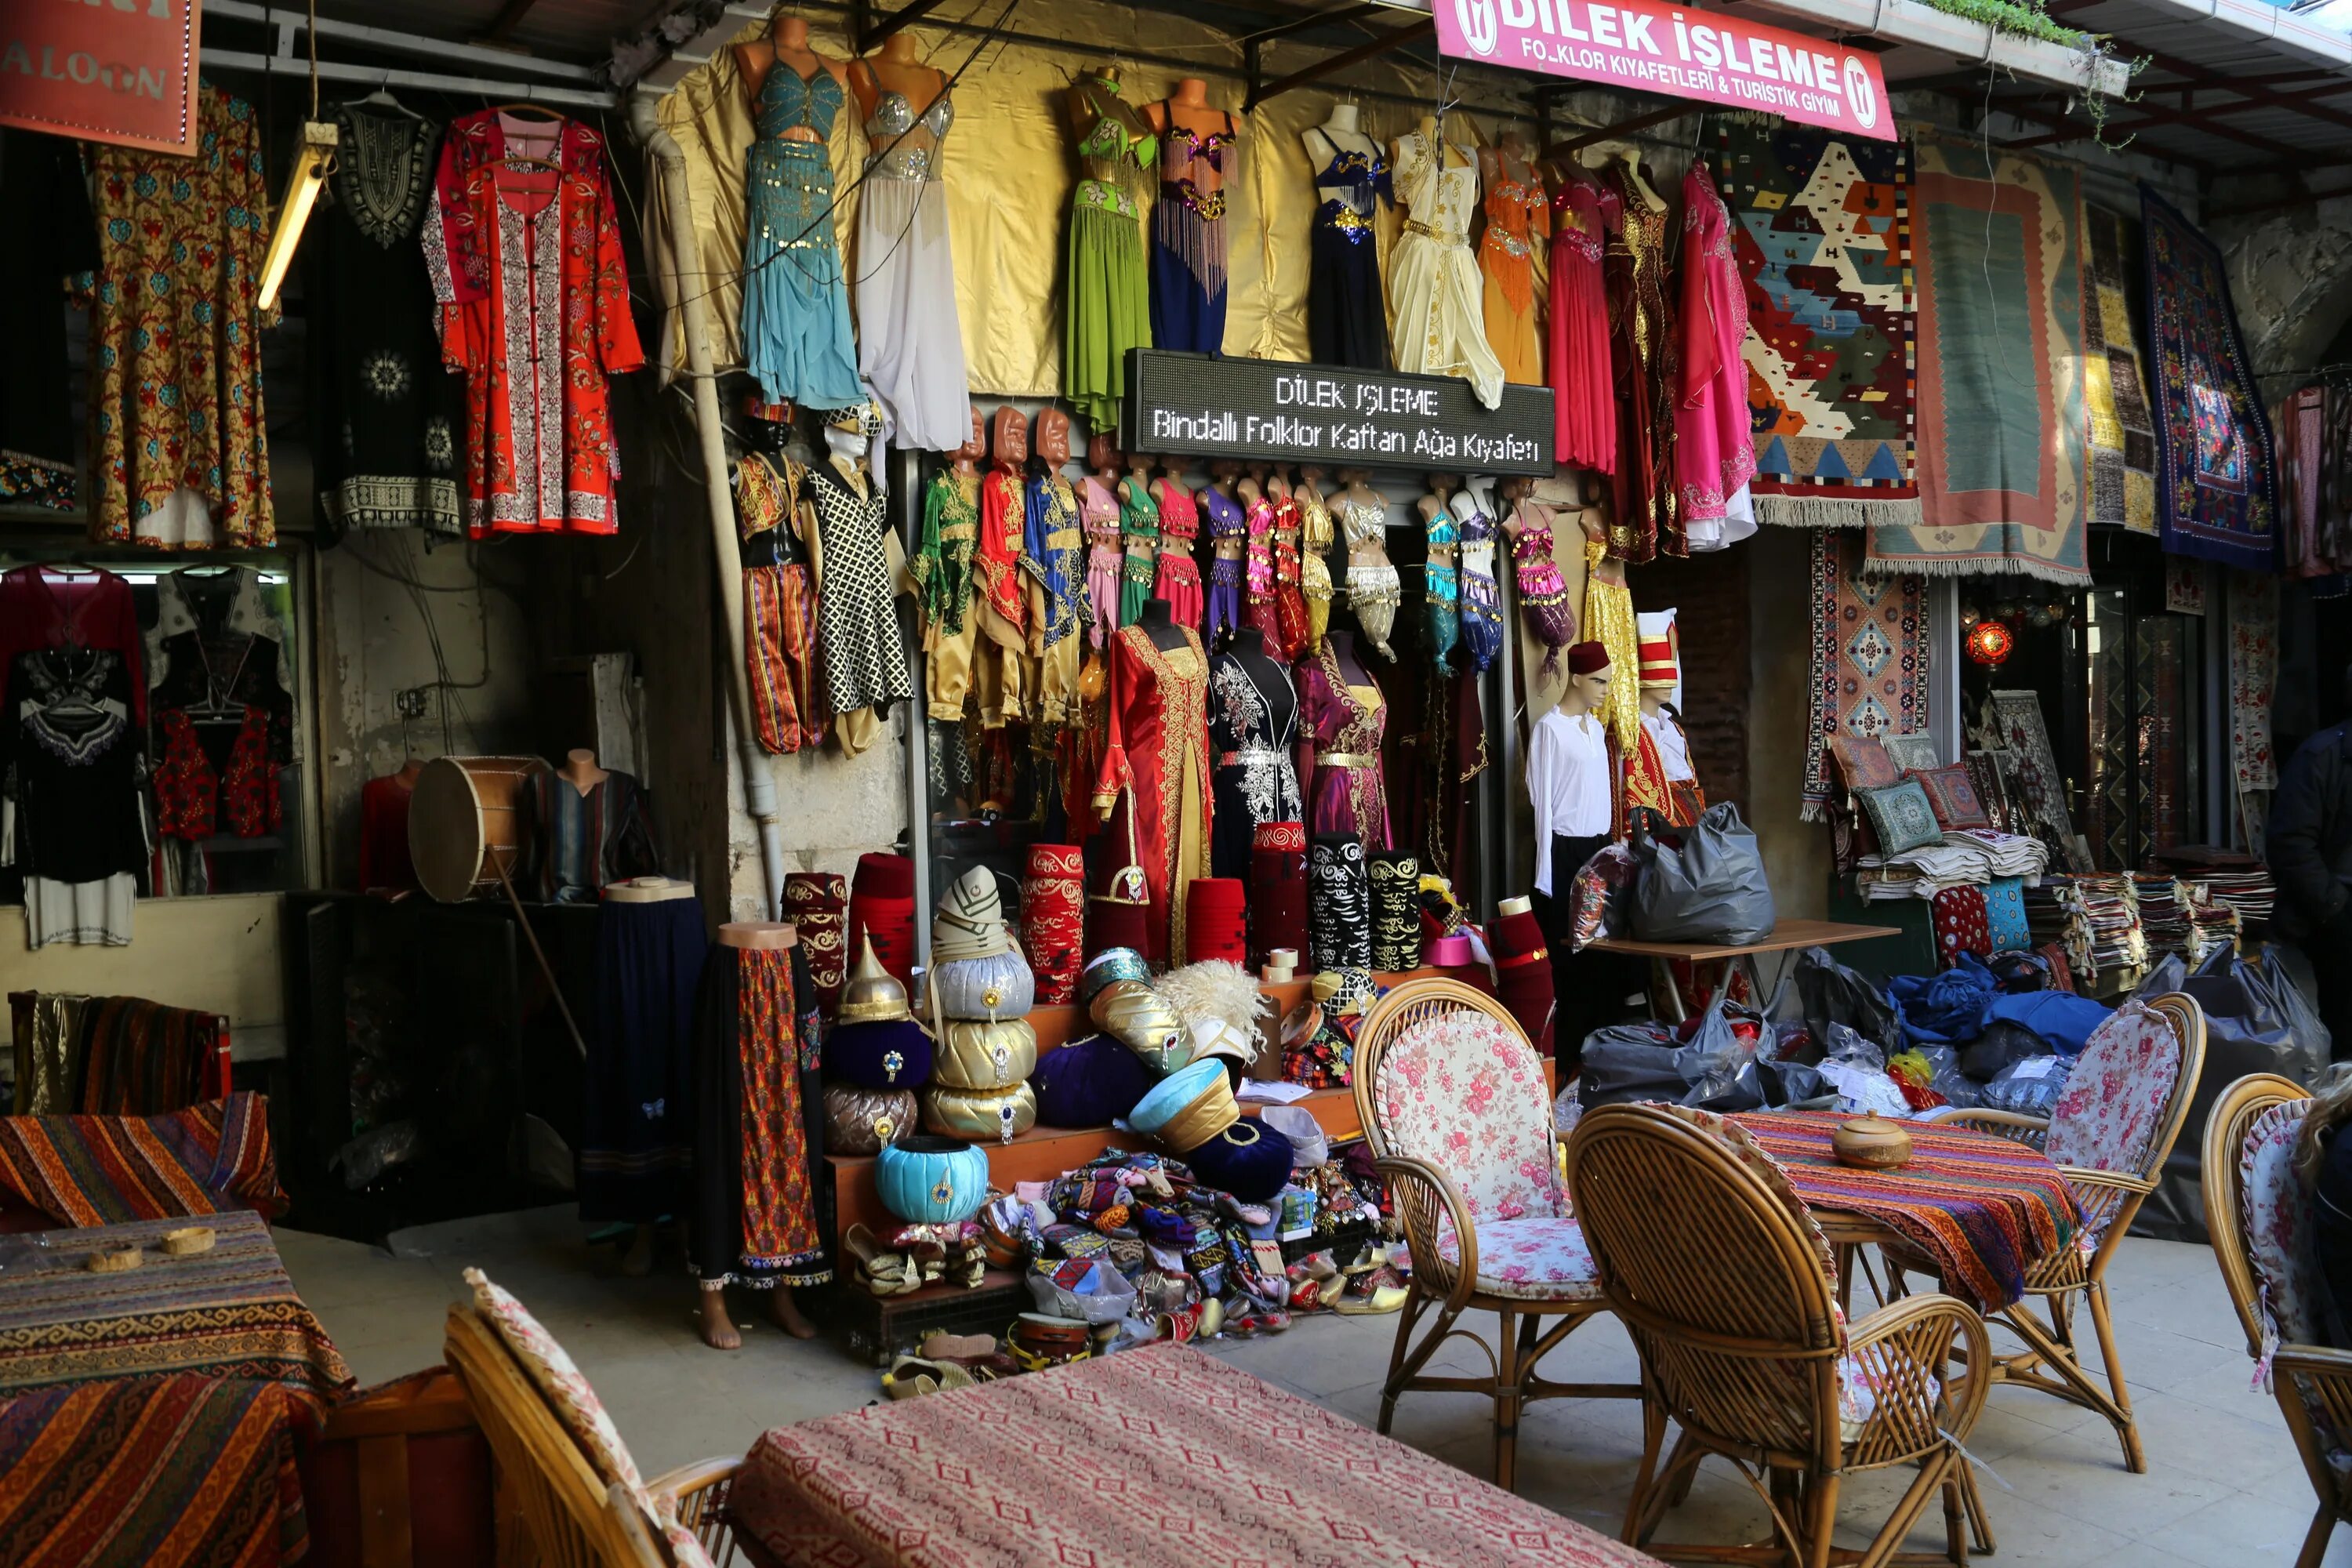 Базар интернет магазин. Рынок в Стамбуле Гранд базар одежда. Стамбул рынок вещевой. Трабзон Турция рынок. Стамбул базар Трабзон.